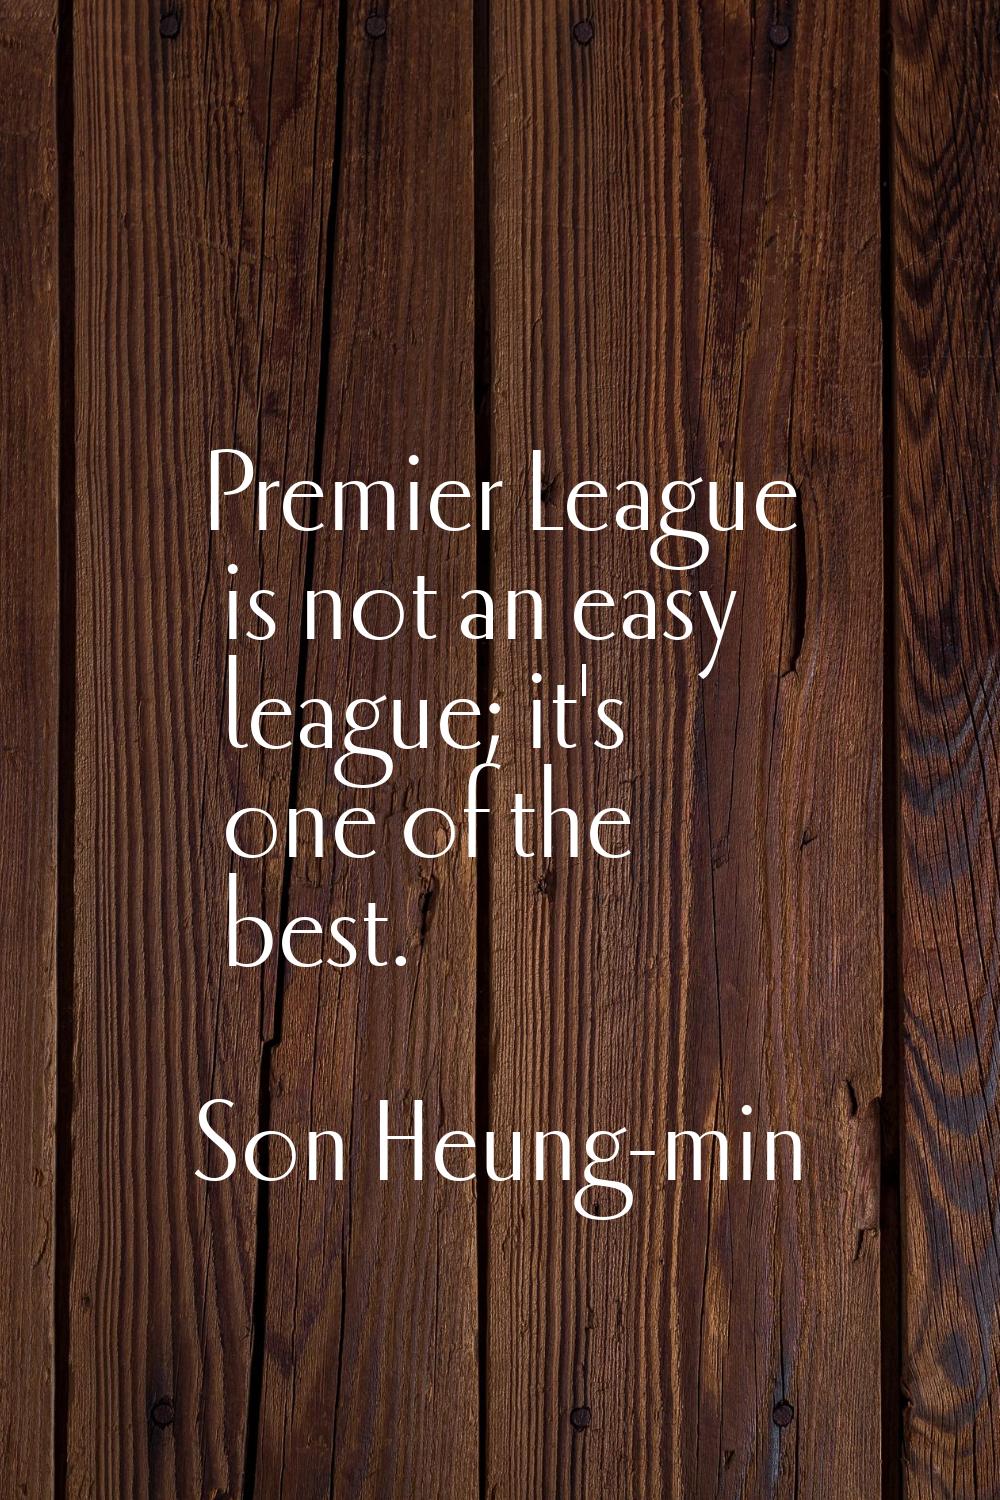 Premier League is not an easy league; it's one of the best.